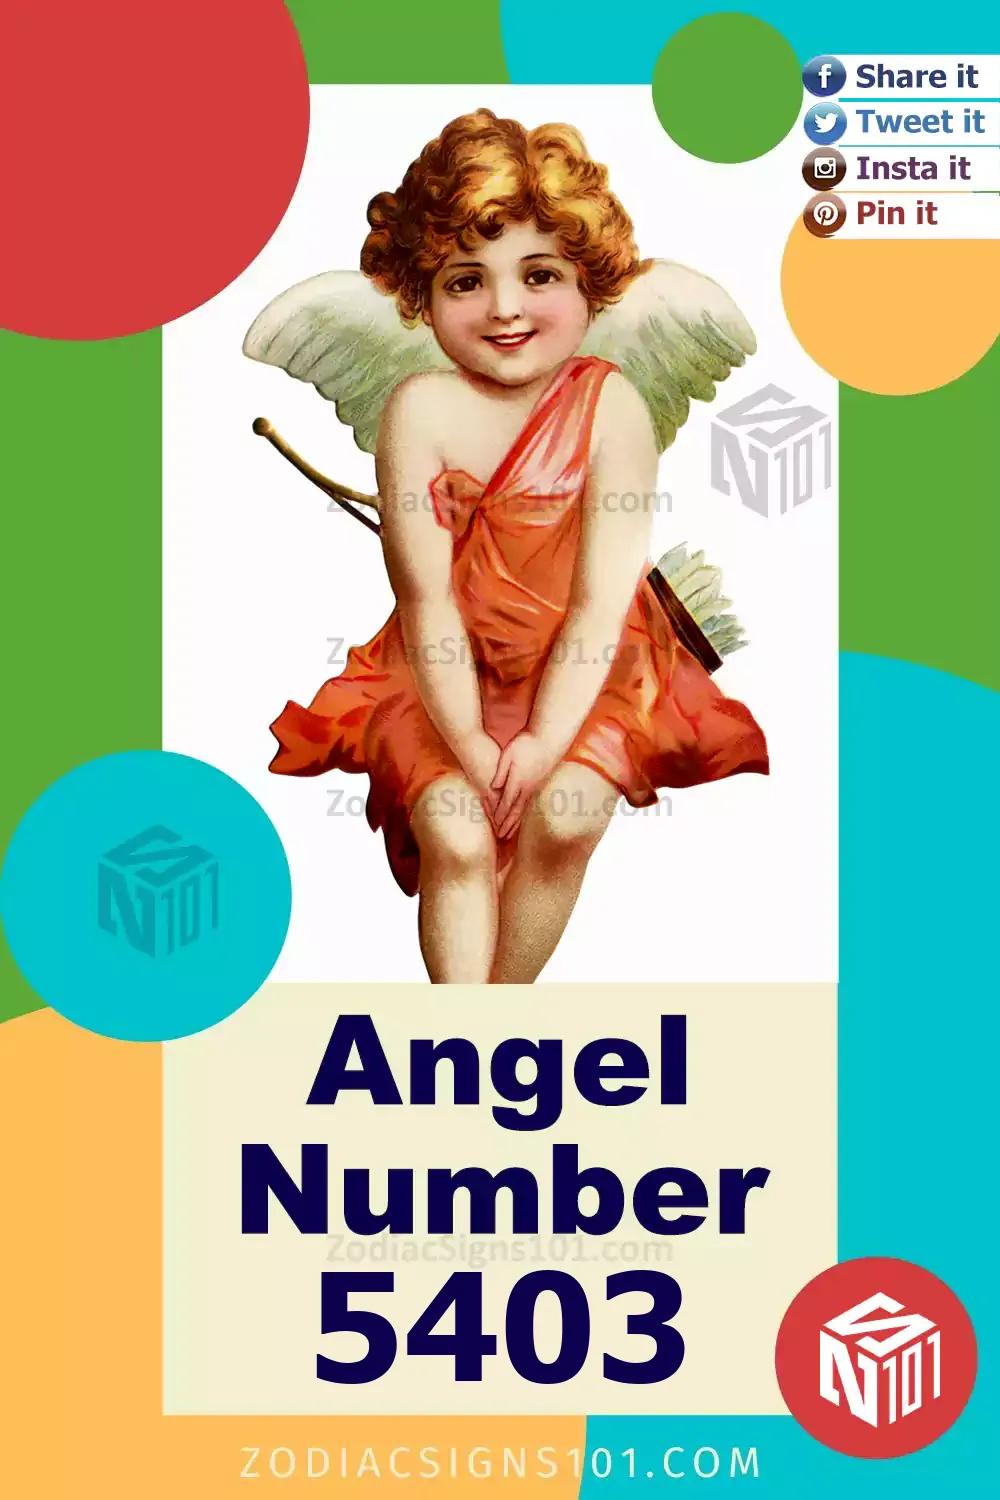 5403-Angel-Number-Meaning.jpg